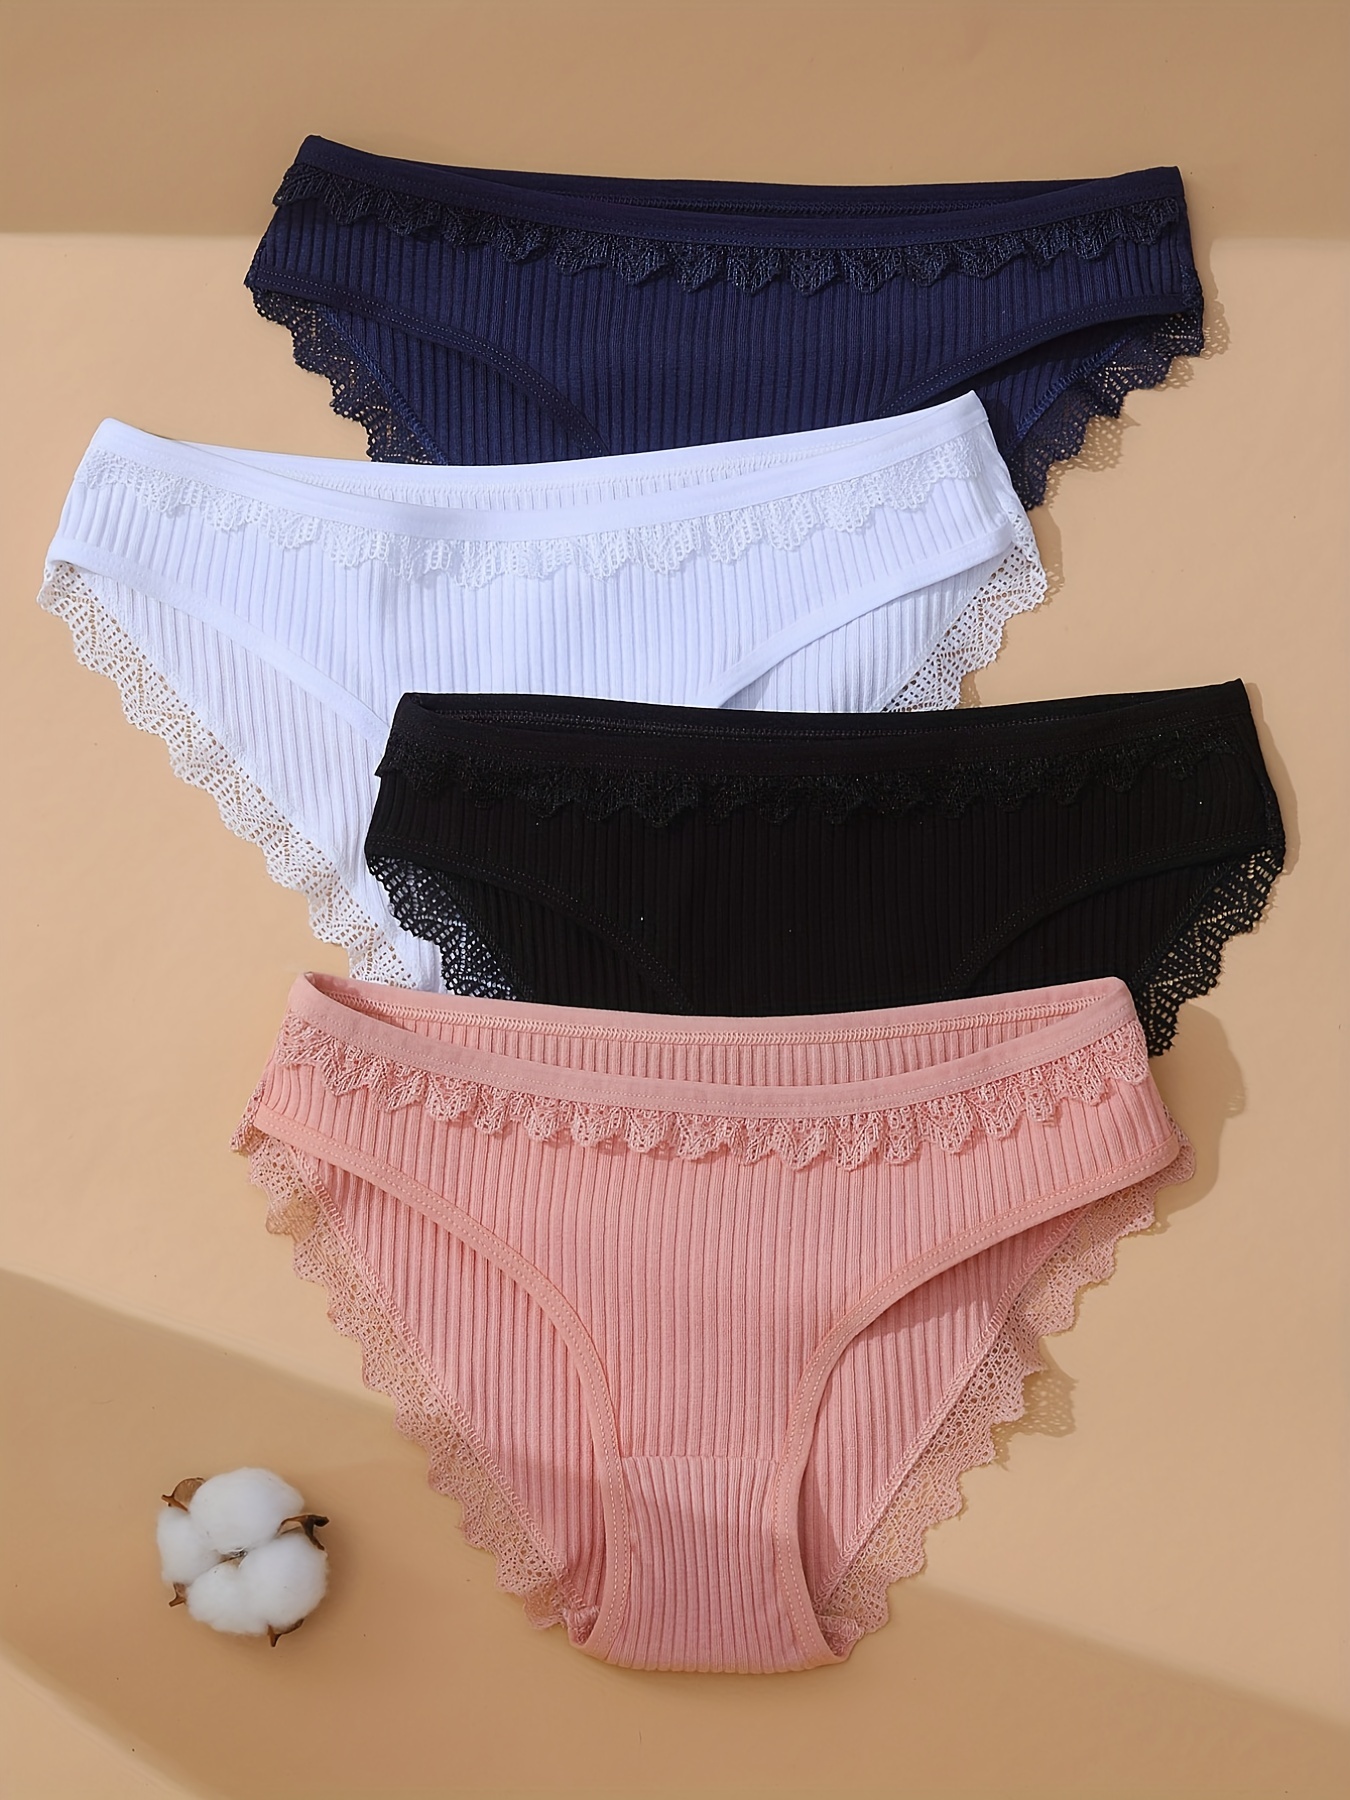 What is Seamless Briefs Lady Undergarments Cotton Panties Sexy Ladies  Underwear